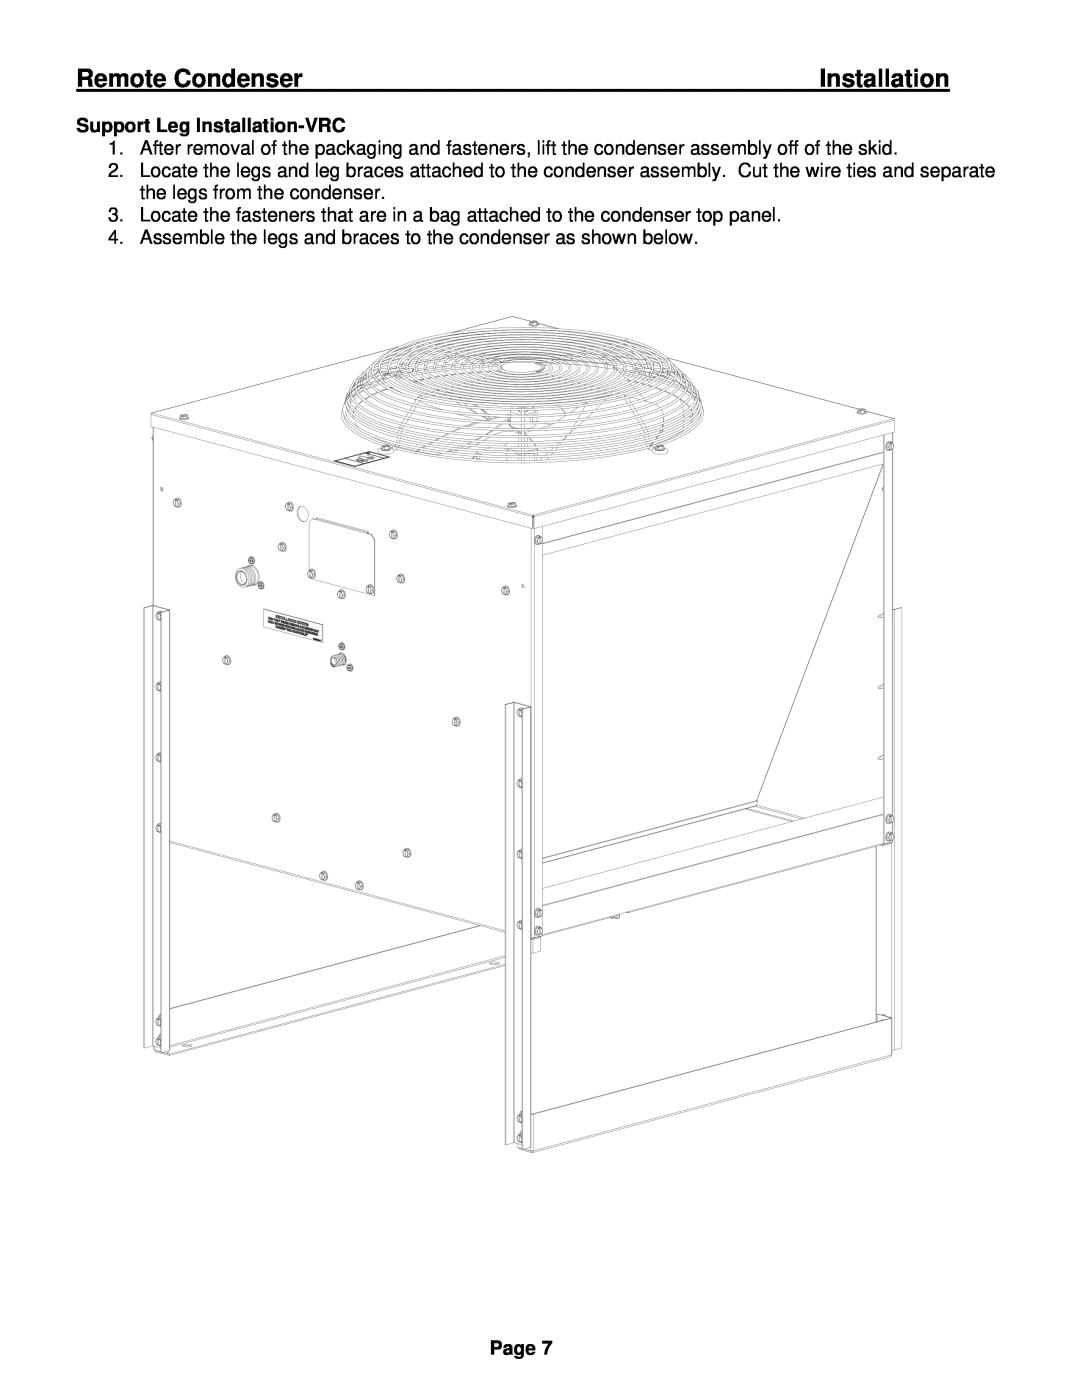 Ice-O-Matic manual Remote Condenser, Support Leg Installation-VRC, Page 